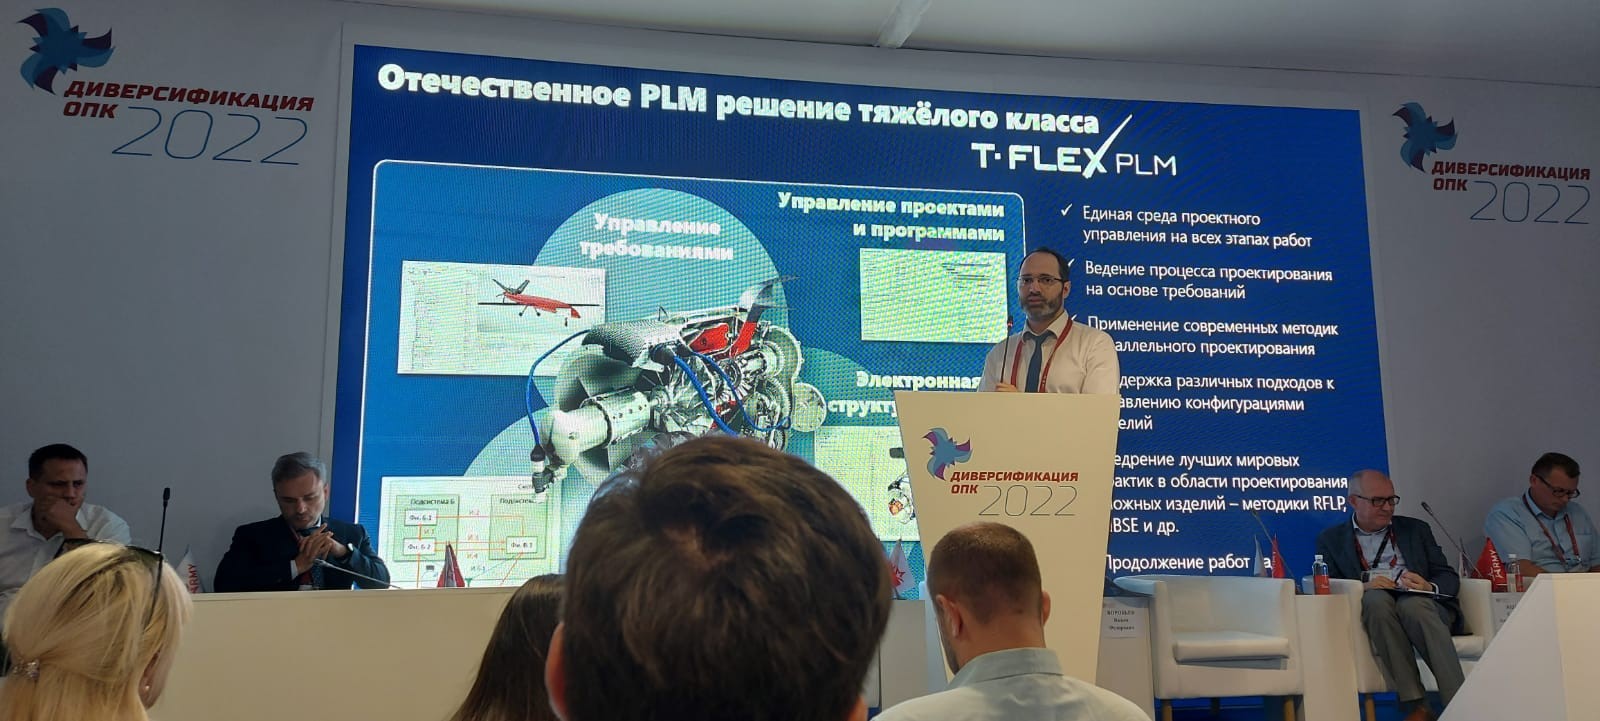 T-FLEX PLM 2022 - Армия 2022